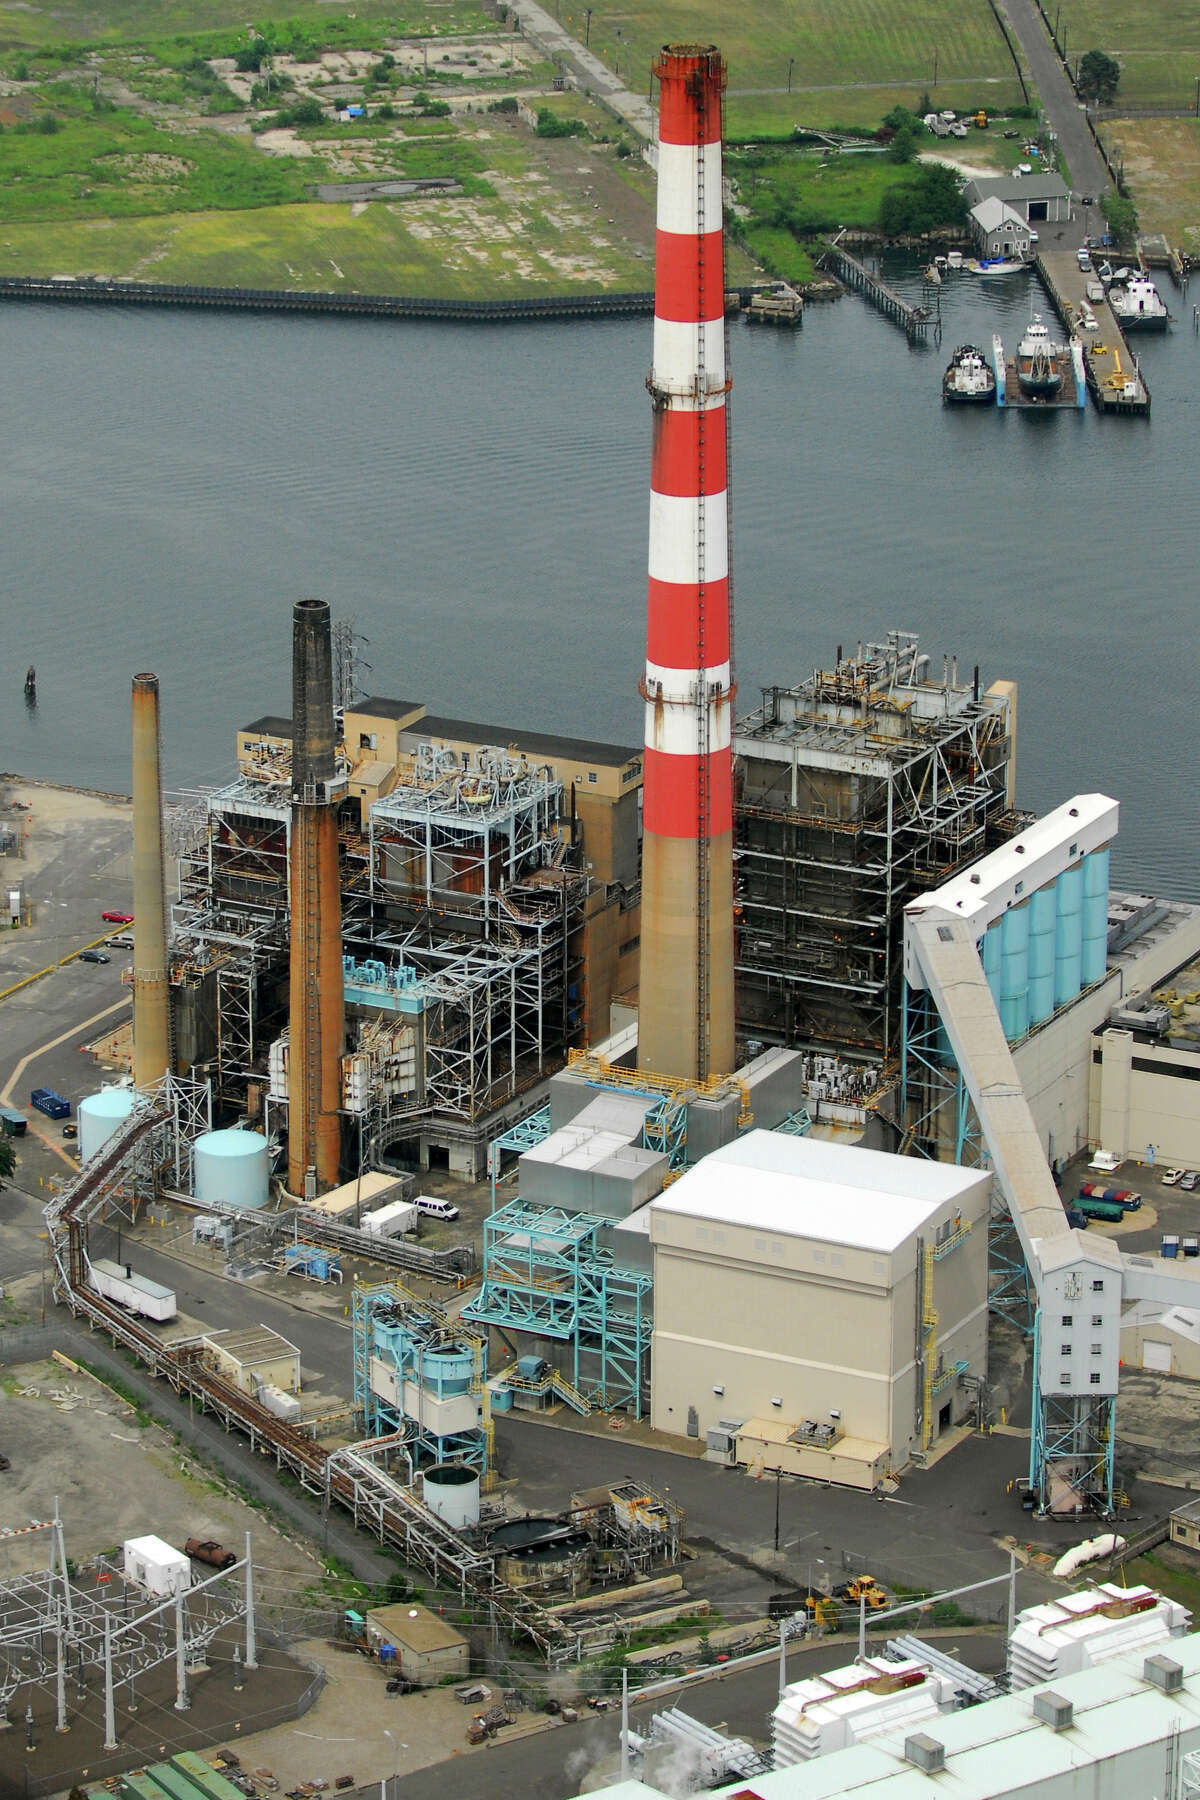 Bridgeport Harbor Generating Station, PSEG, power plant. 2011. Morgan Kaolian AEROPIX